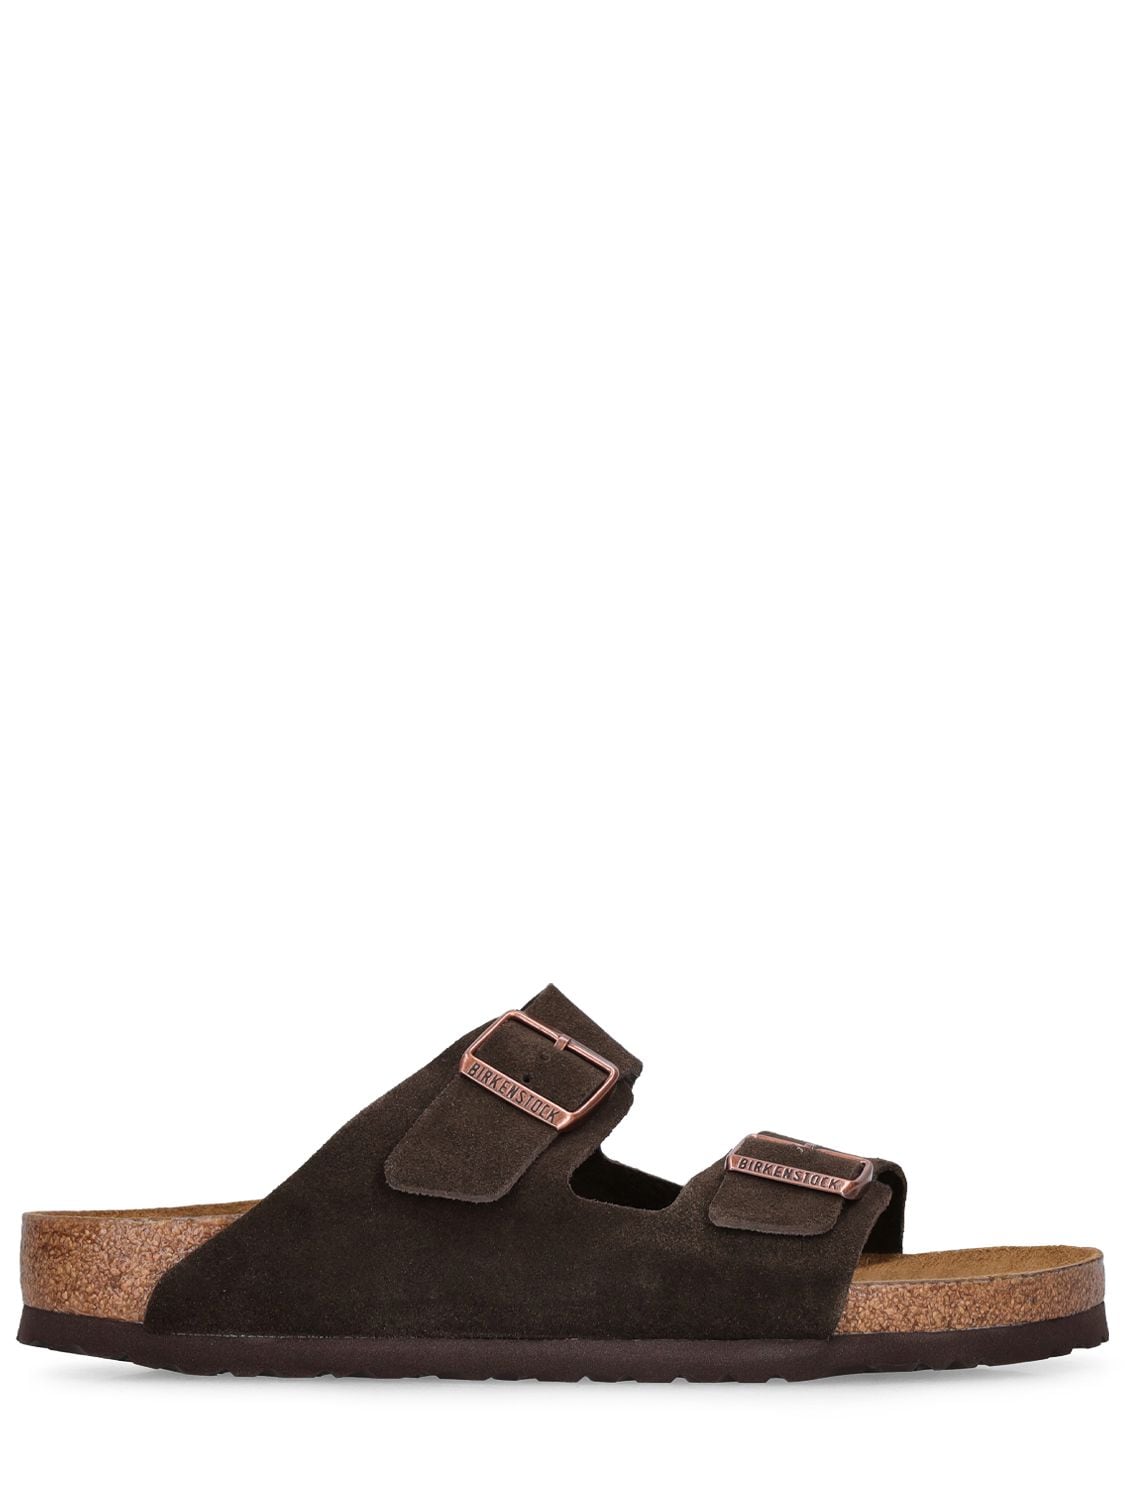 BIRKENSTOCK Arizona Sfb Leather Sandals